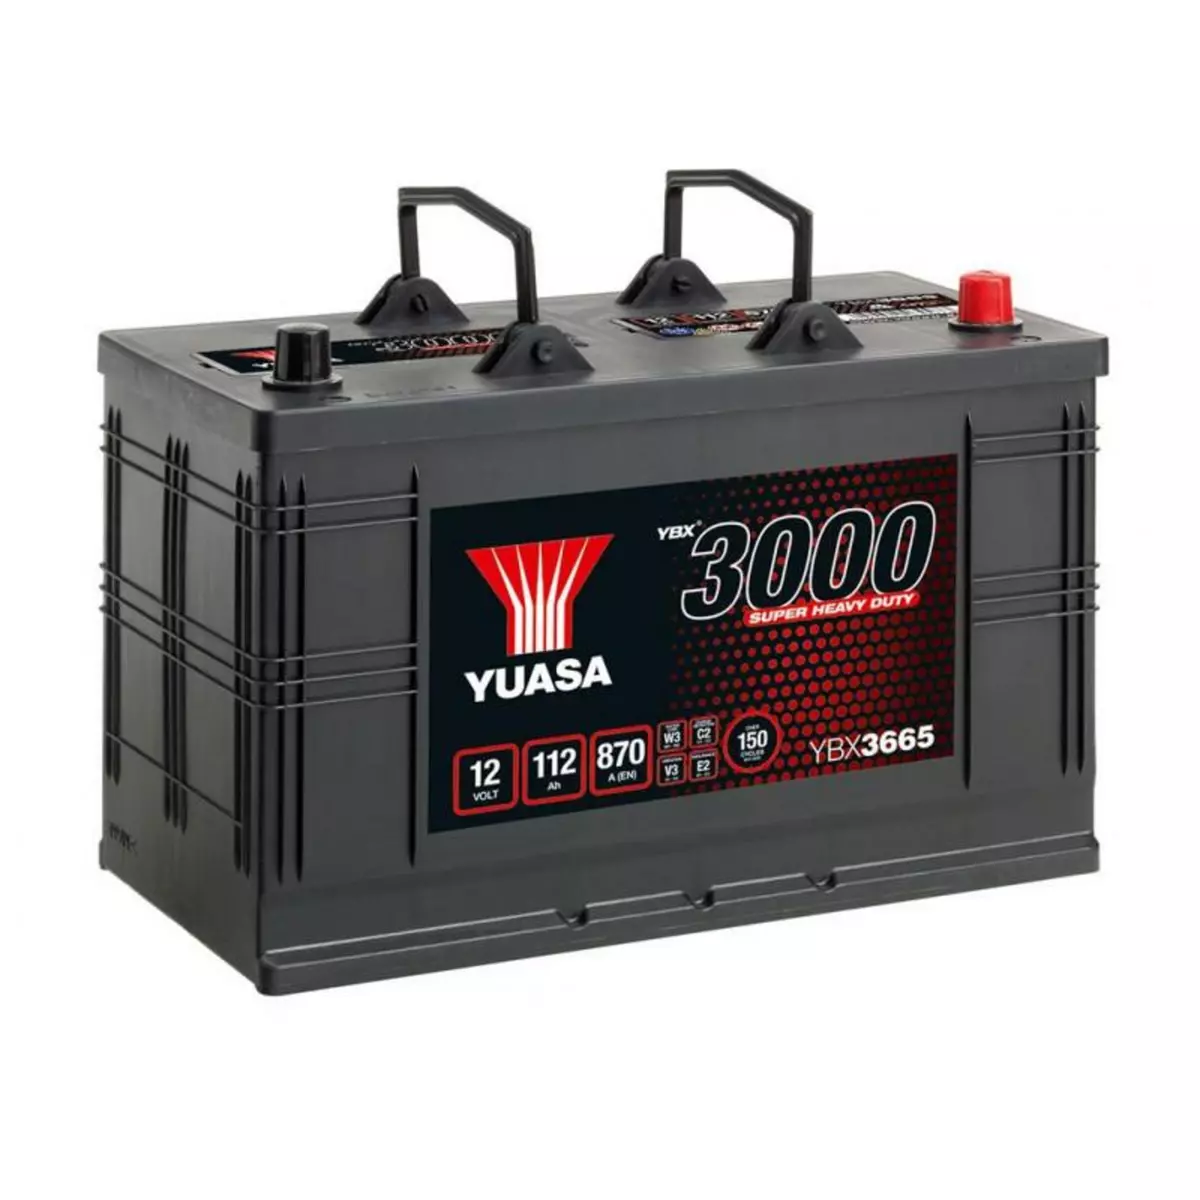 YUASA Batterie YUASA Cargo YBX3665 12v 112AH 870A (IDEM 665SHD)